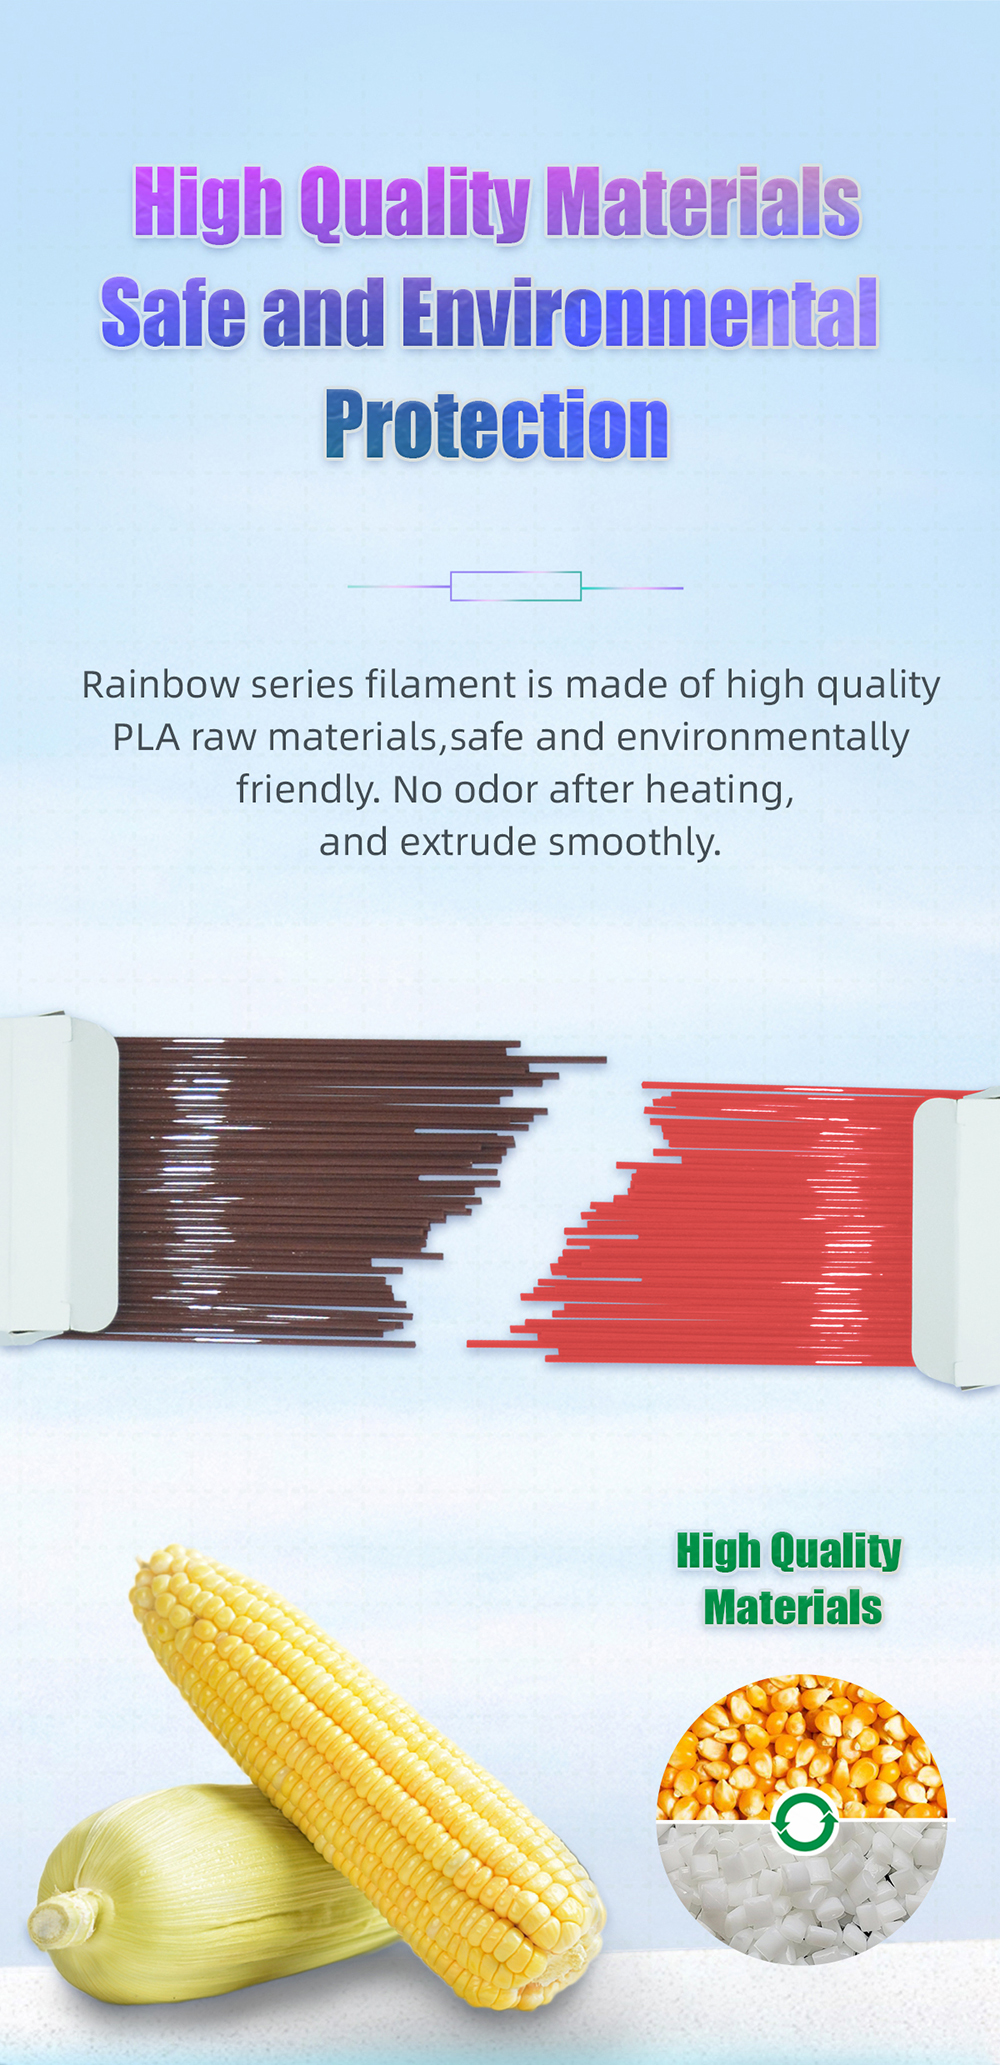 geeetech 3D Pen Filament 1.75mm PLA Pink, Length 250mm x 50pcs description of safe and  environmental protection